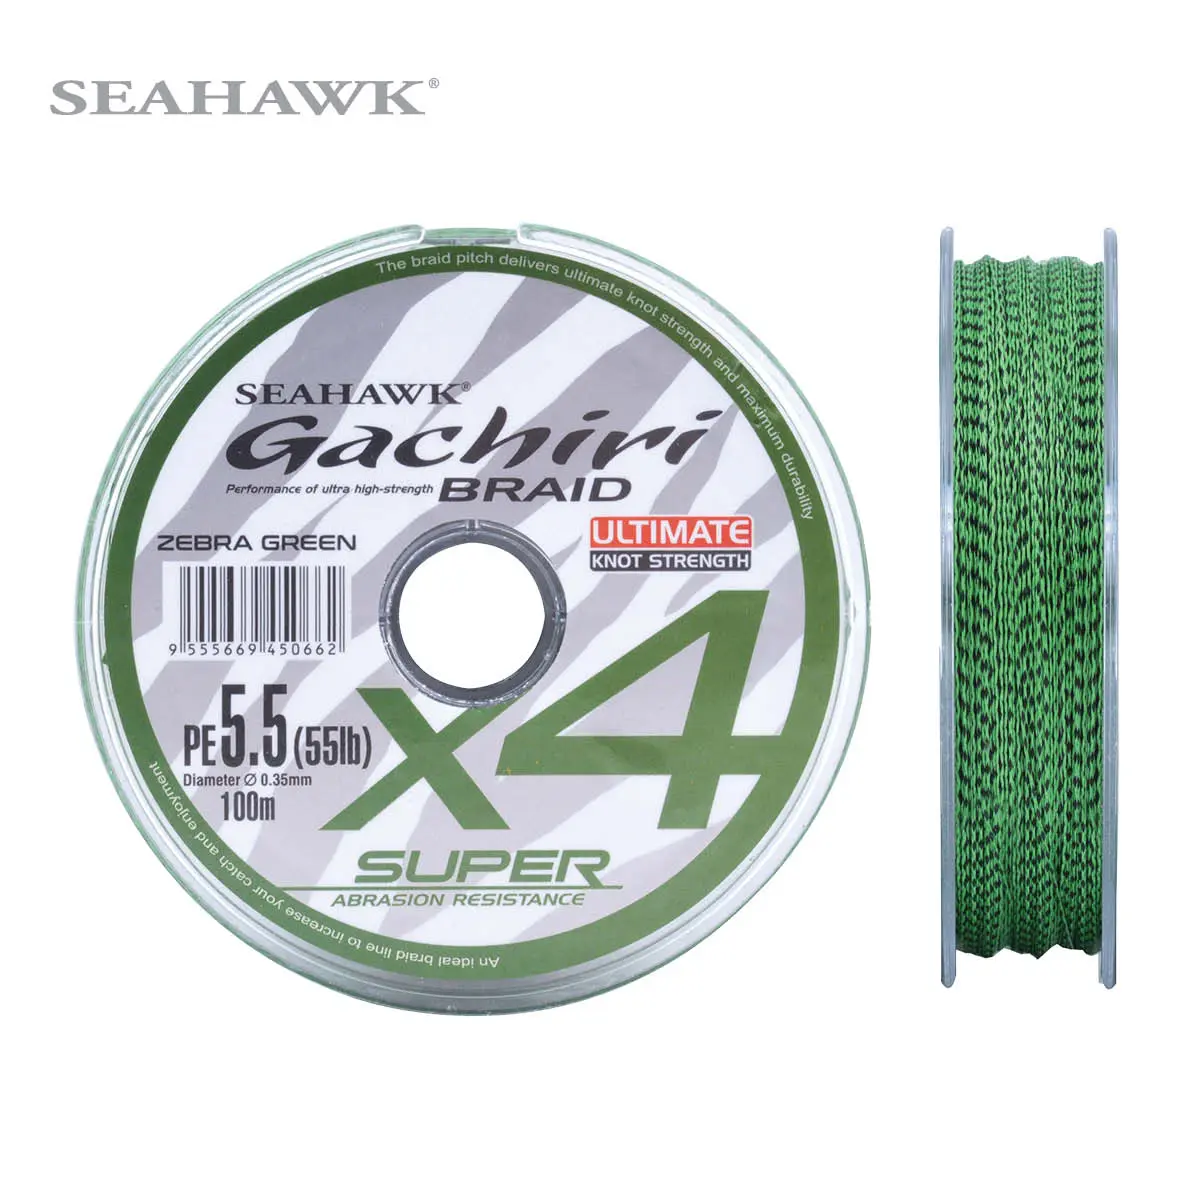 Seahawk Gachiri 4X Braided Line - Color-Lock Technology